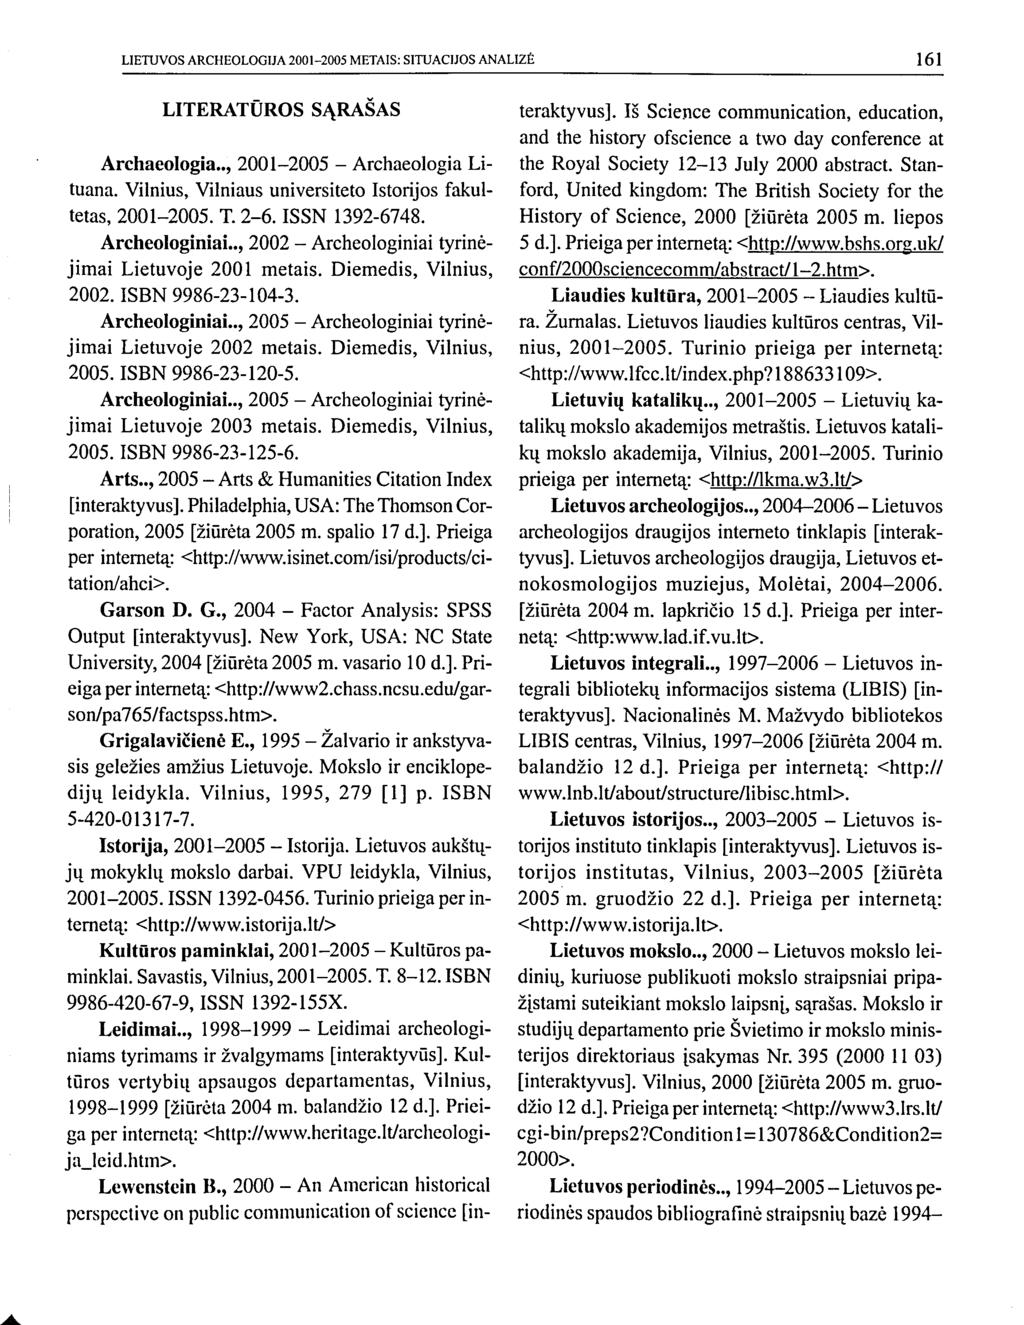 LITERATŪROS SĄRAŠAS Archaeologia.., 2001-2005 - Archaeologia Lituana. Vilnius, Vilniaus universiteto Istorijos fakultetas, 2001-2005. T. 2-6. ISSN 1392-6748. Archeologiniai.